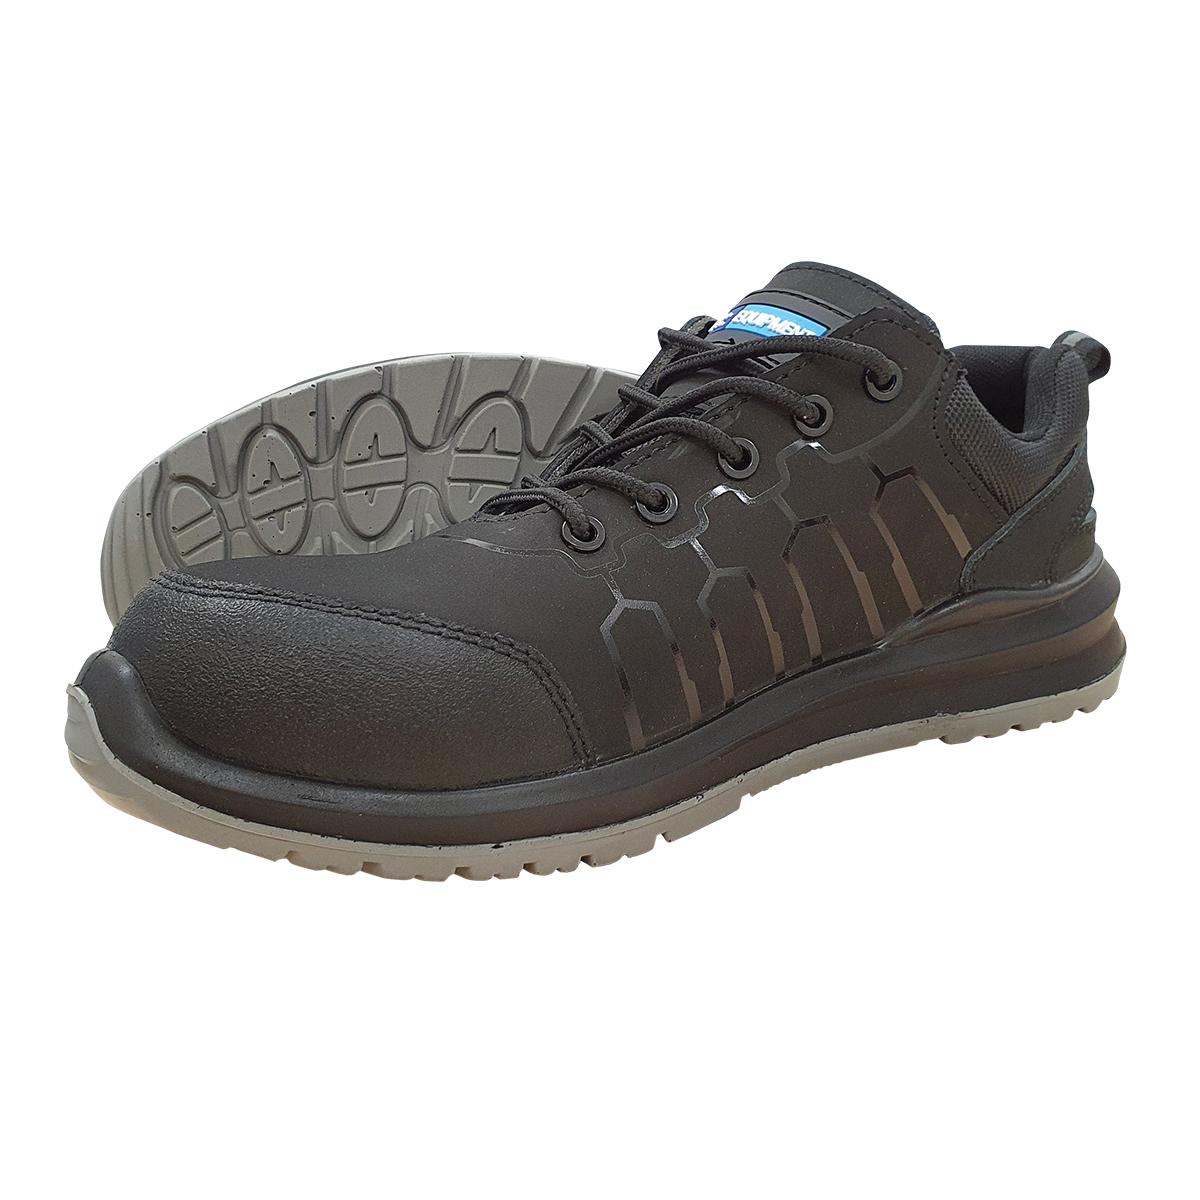 Pantofi protectie RTC, S3 ESD, Madeira, marime 45